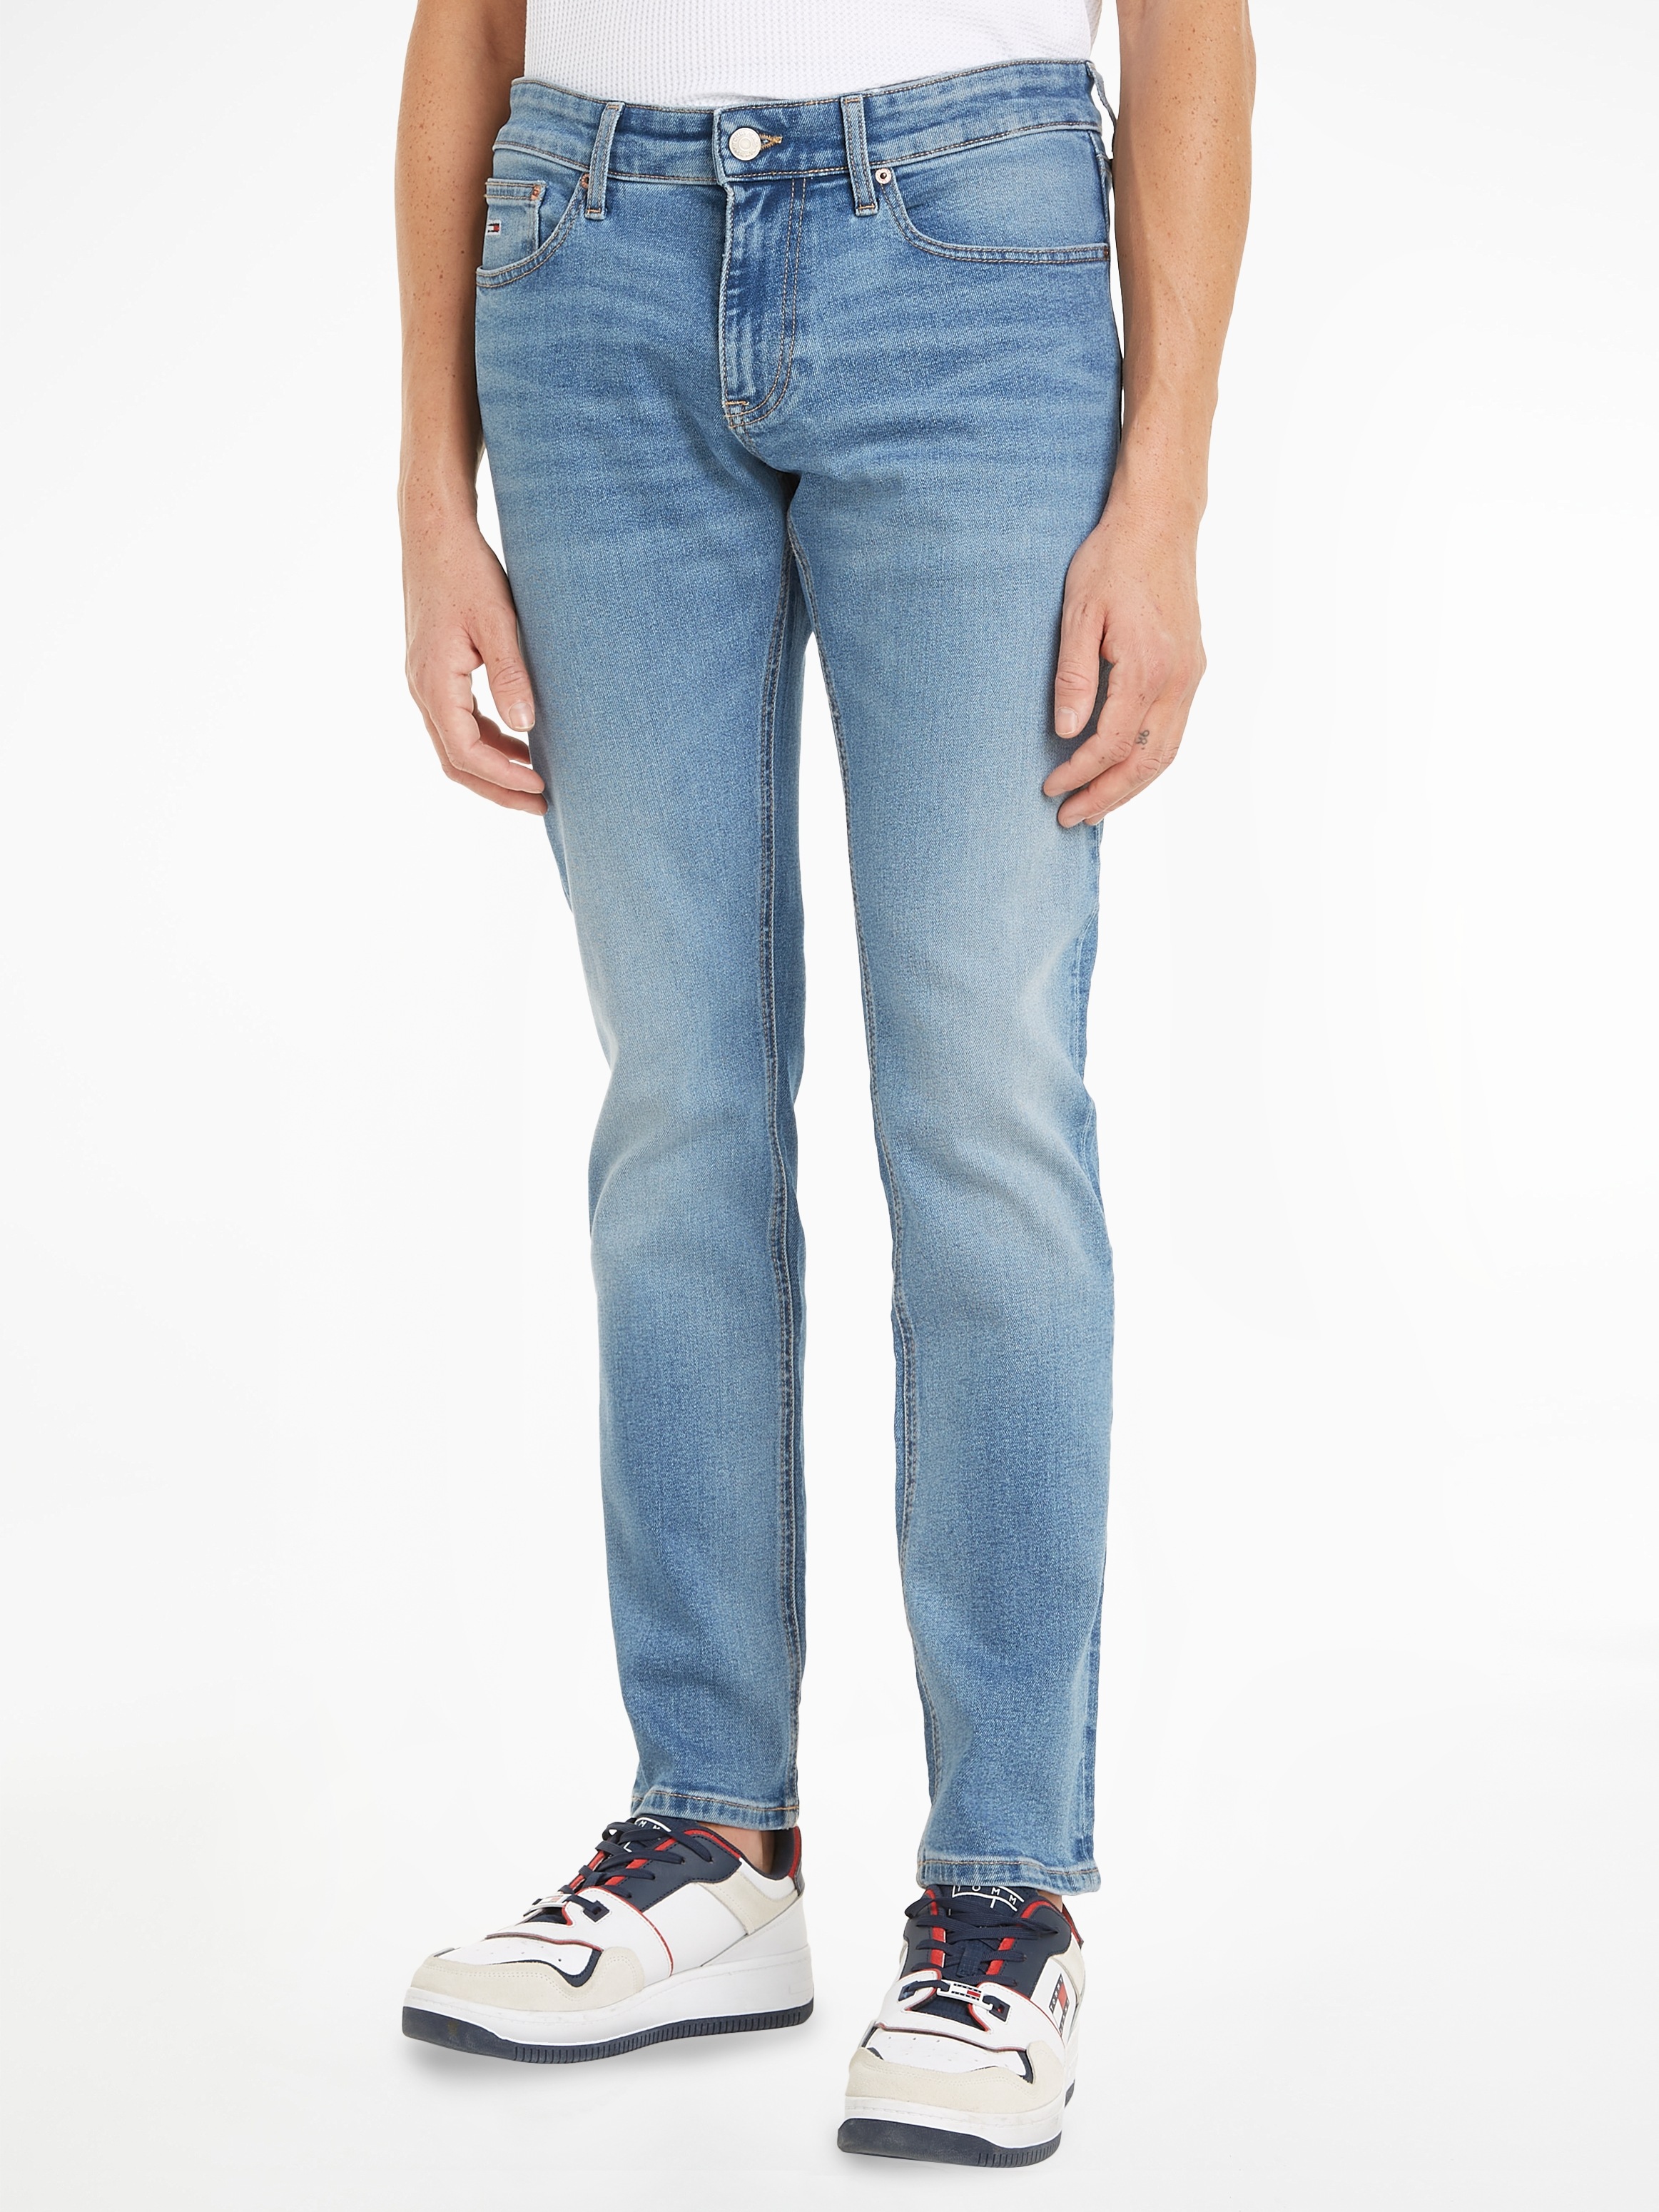 Slim-fit-Jeans TOMMY JEANS "SCANTON SLIM" Gr. 31, Länge 30, blau (denim light) Herren Jeans Slim Fit im 5-Pocket-Style